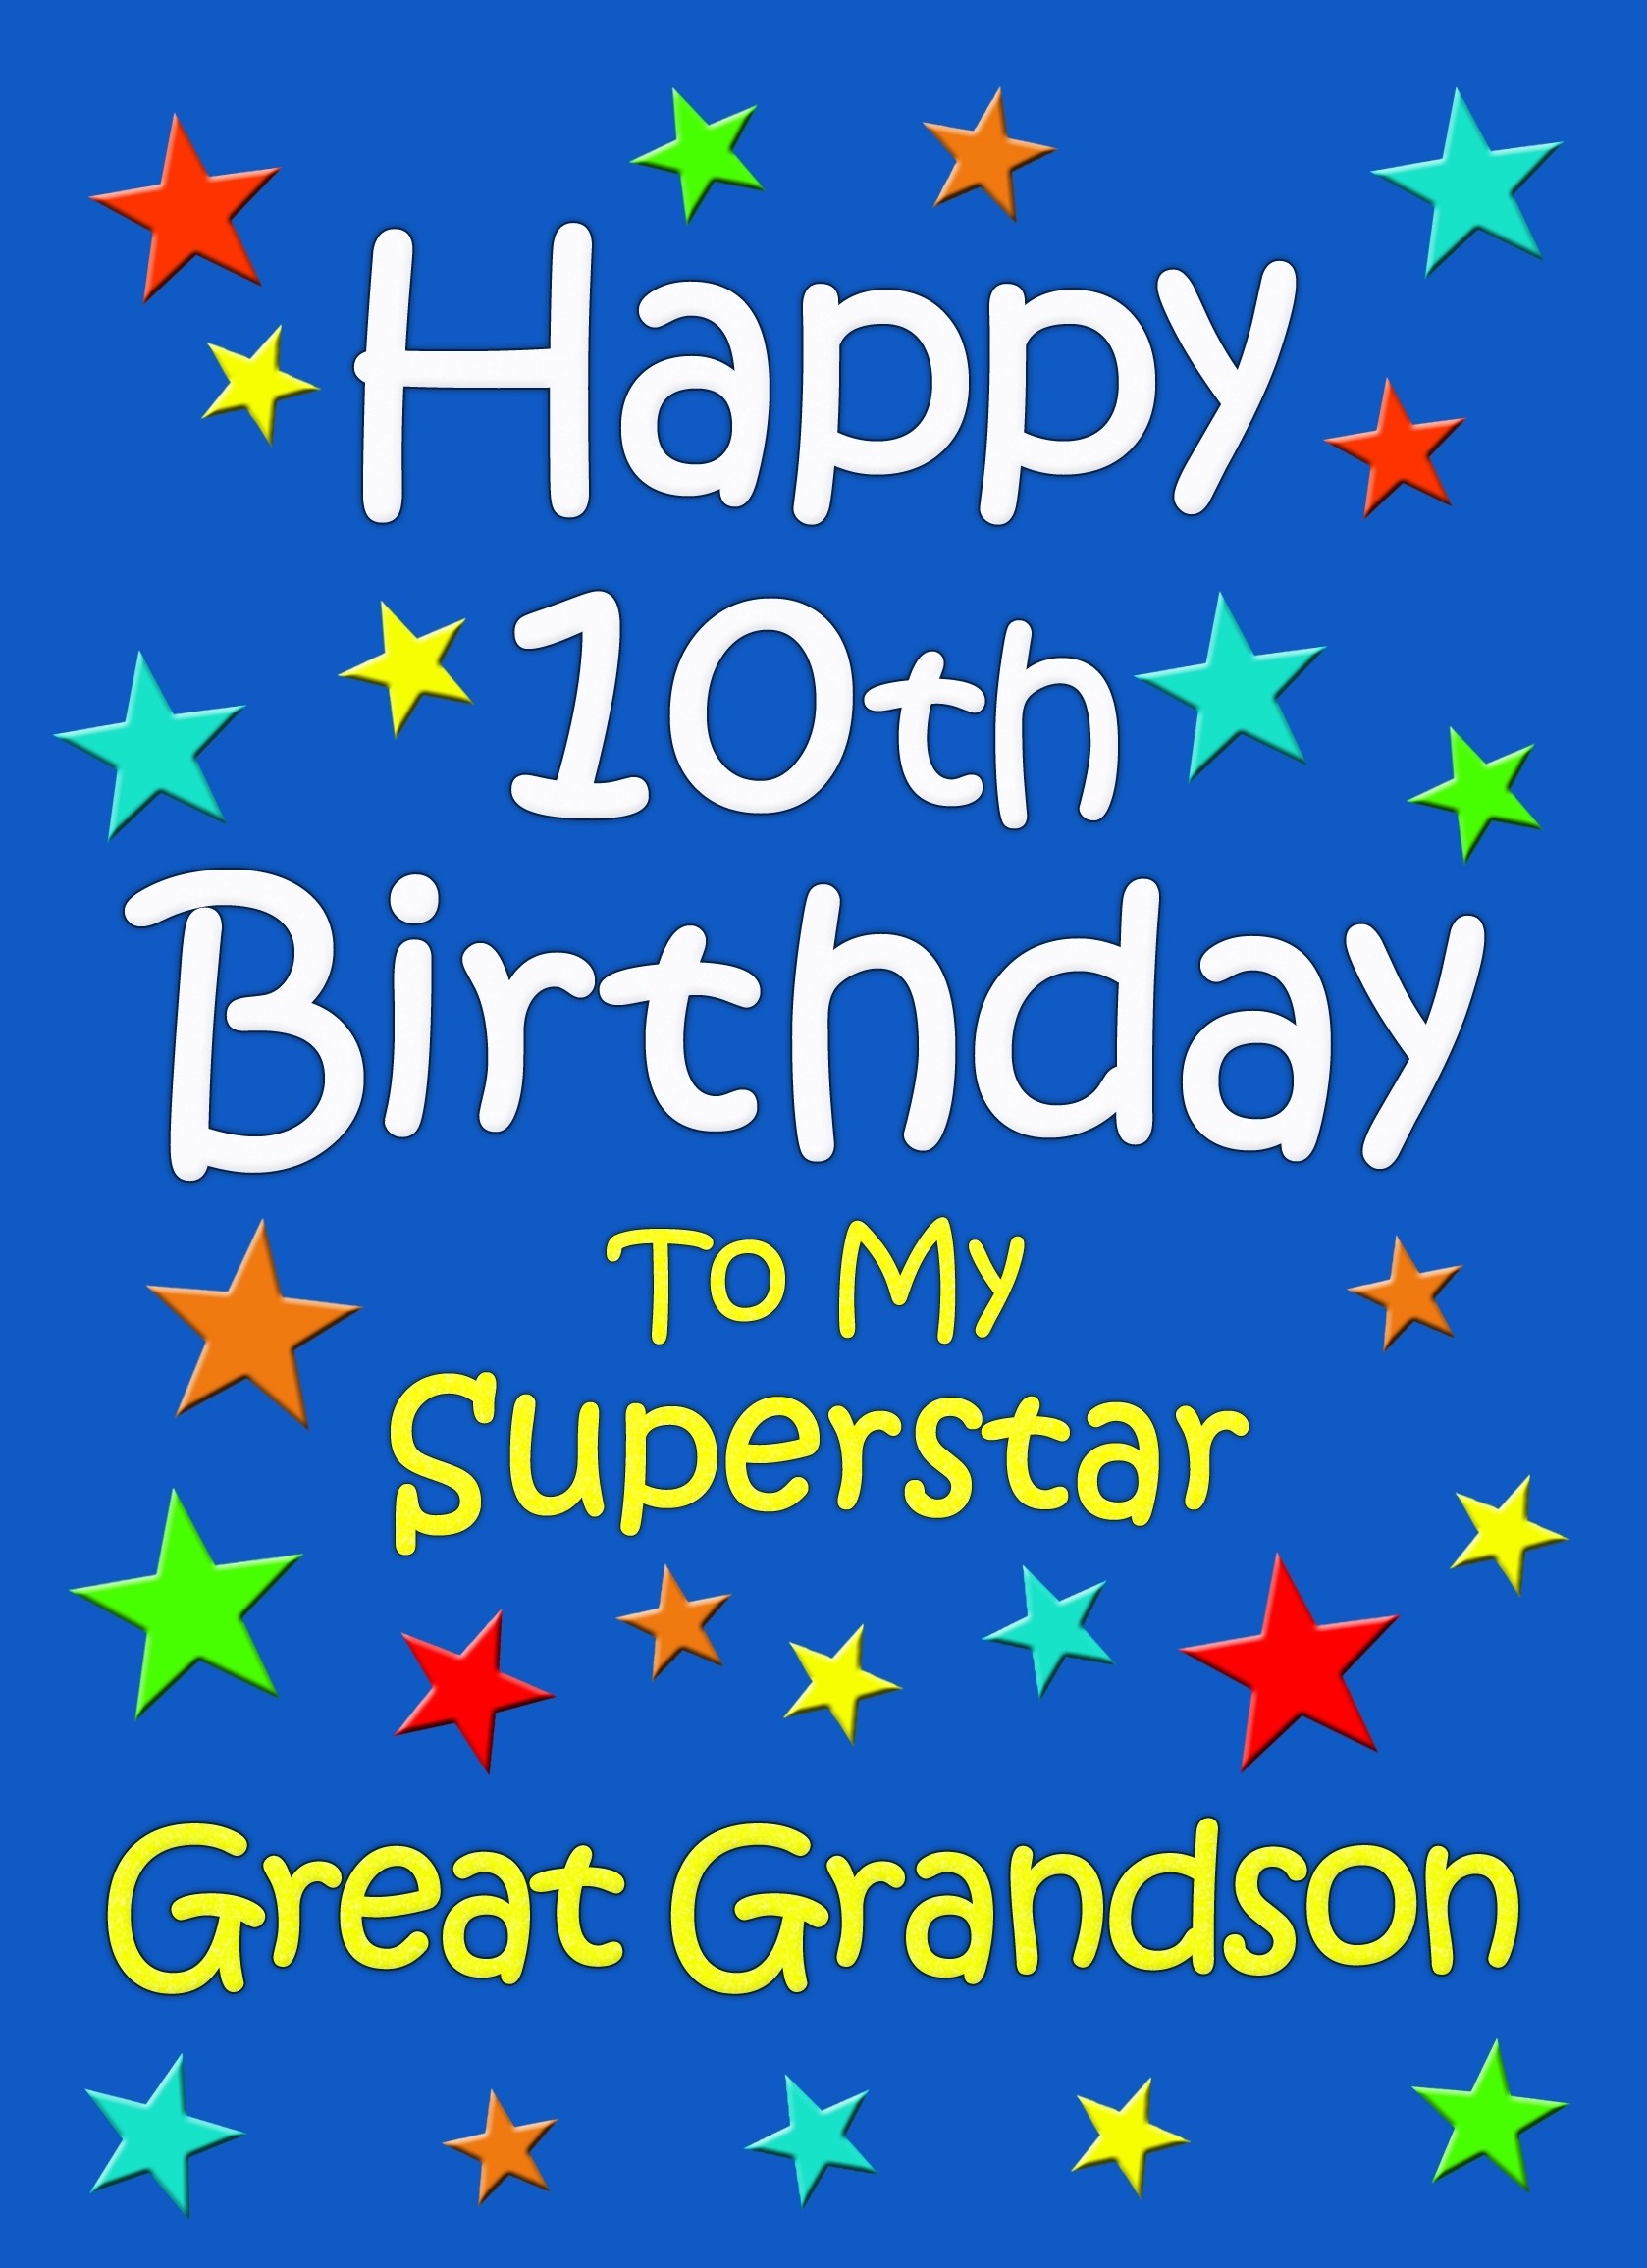 Great Grandson 10th Birthday Card (Blue)